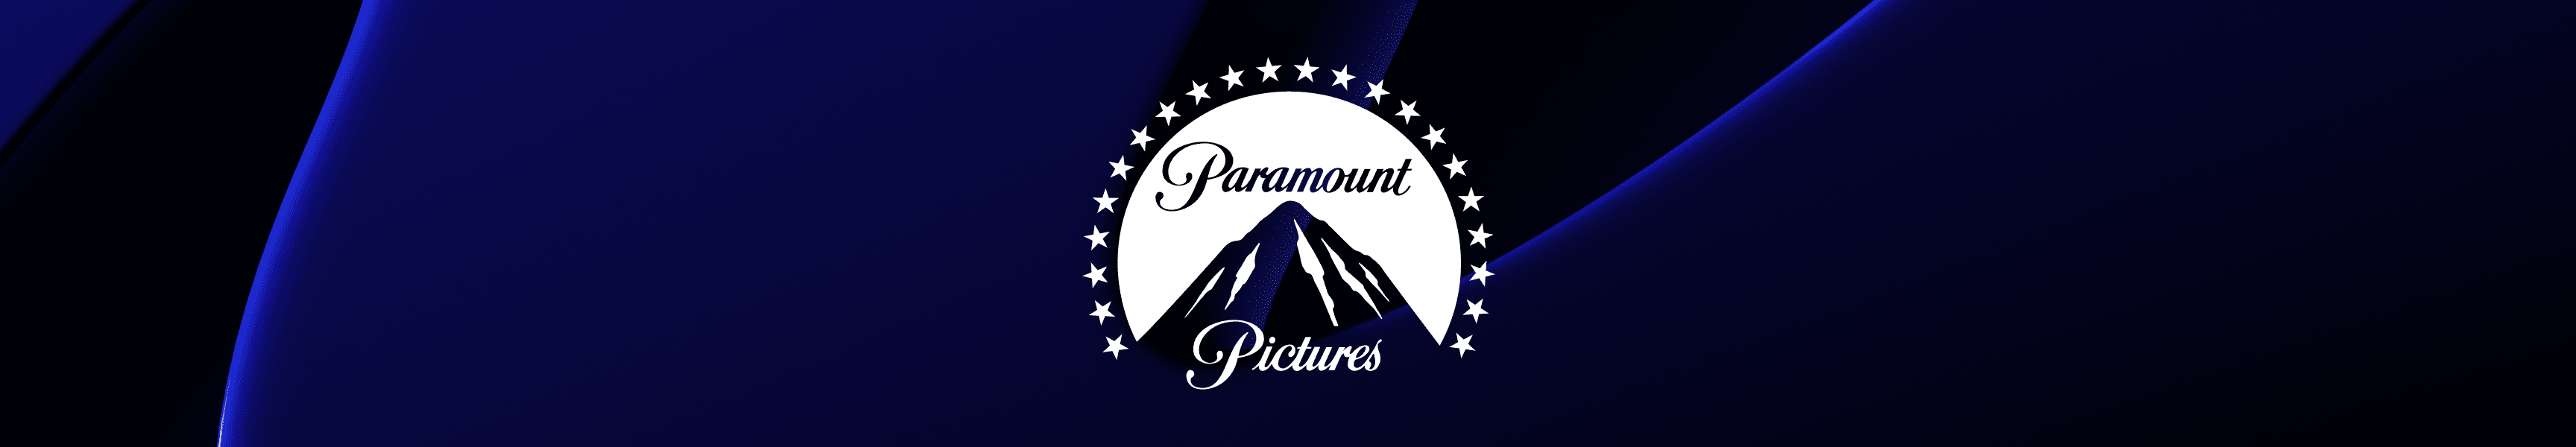 Paramount Pictures Autocollants